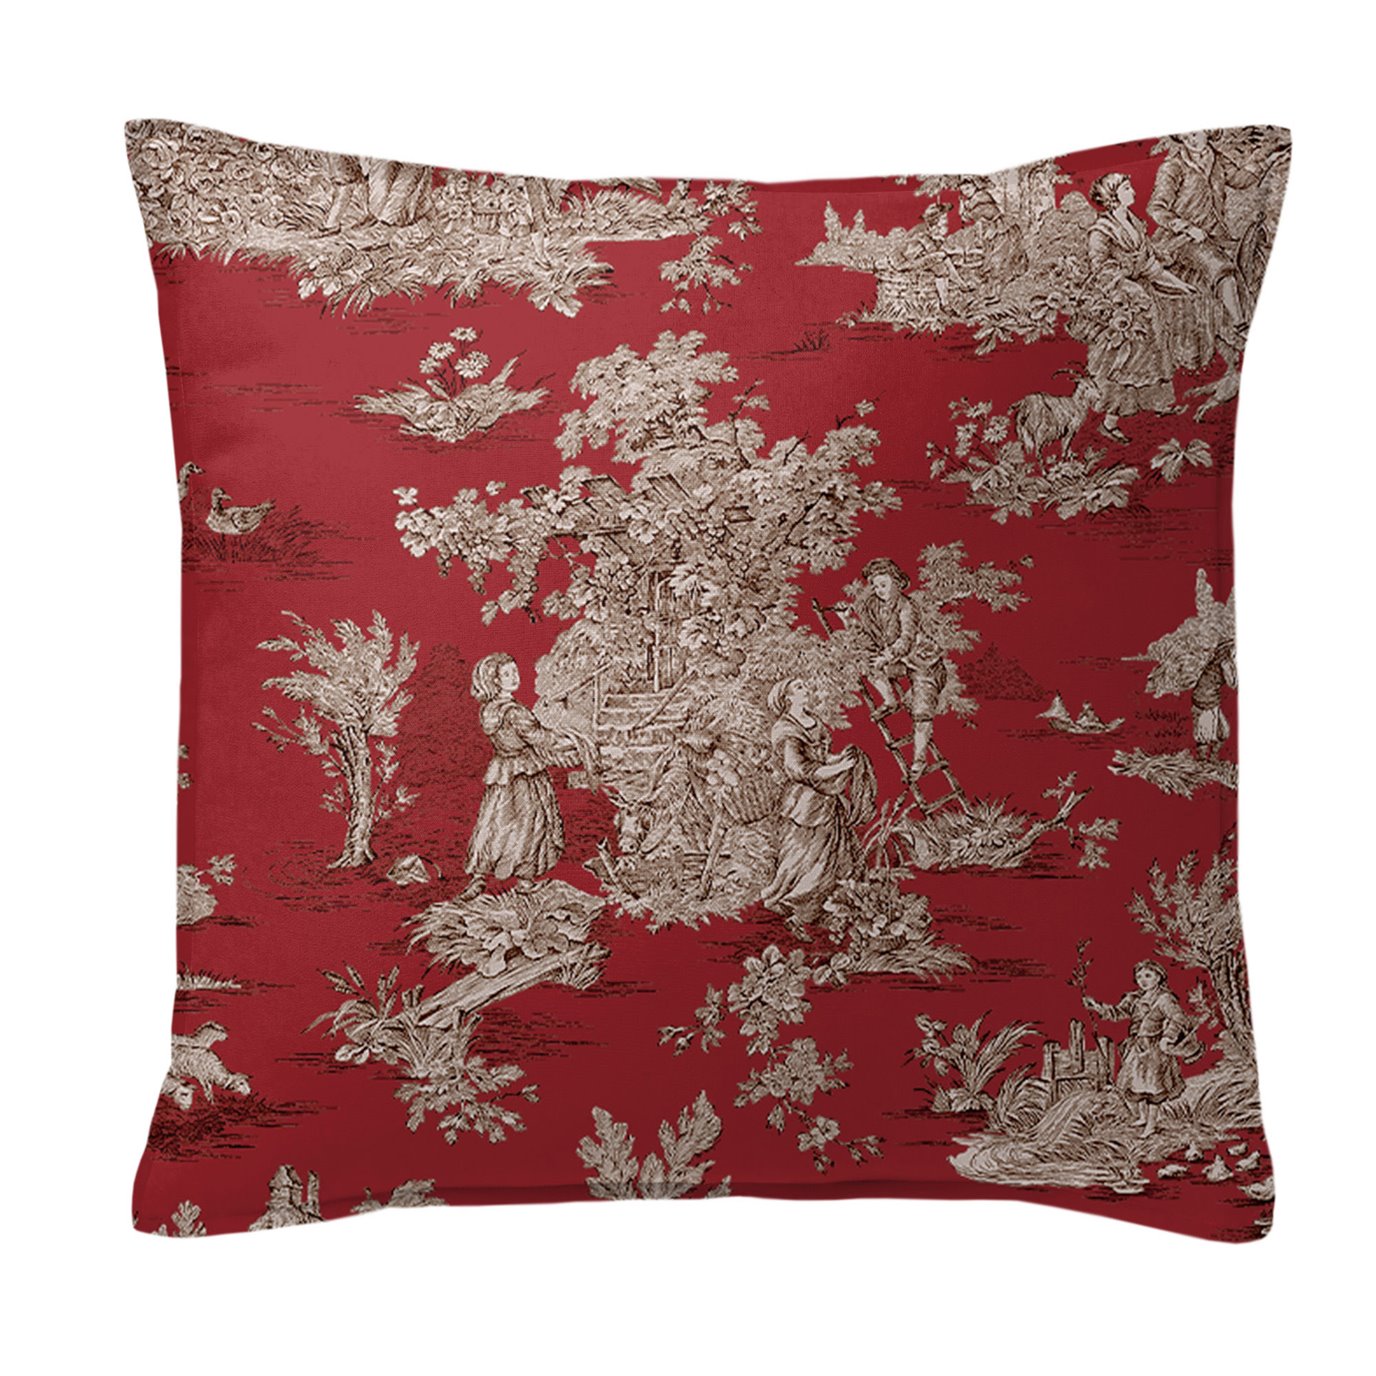 Chateau Red/Black Decorative Pillow - Size 20" Square